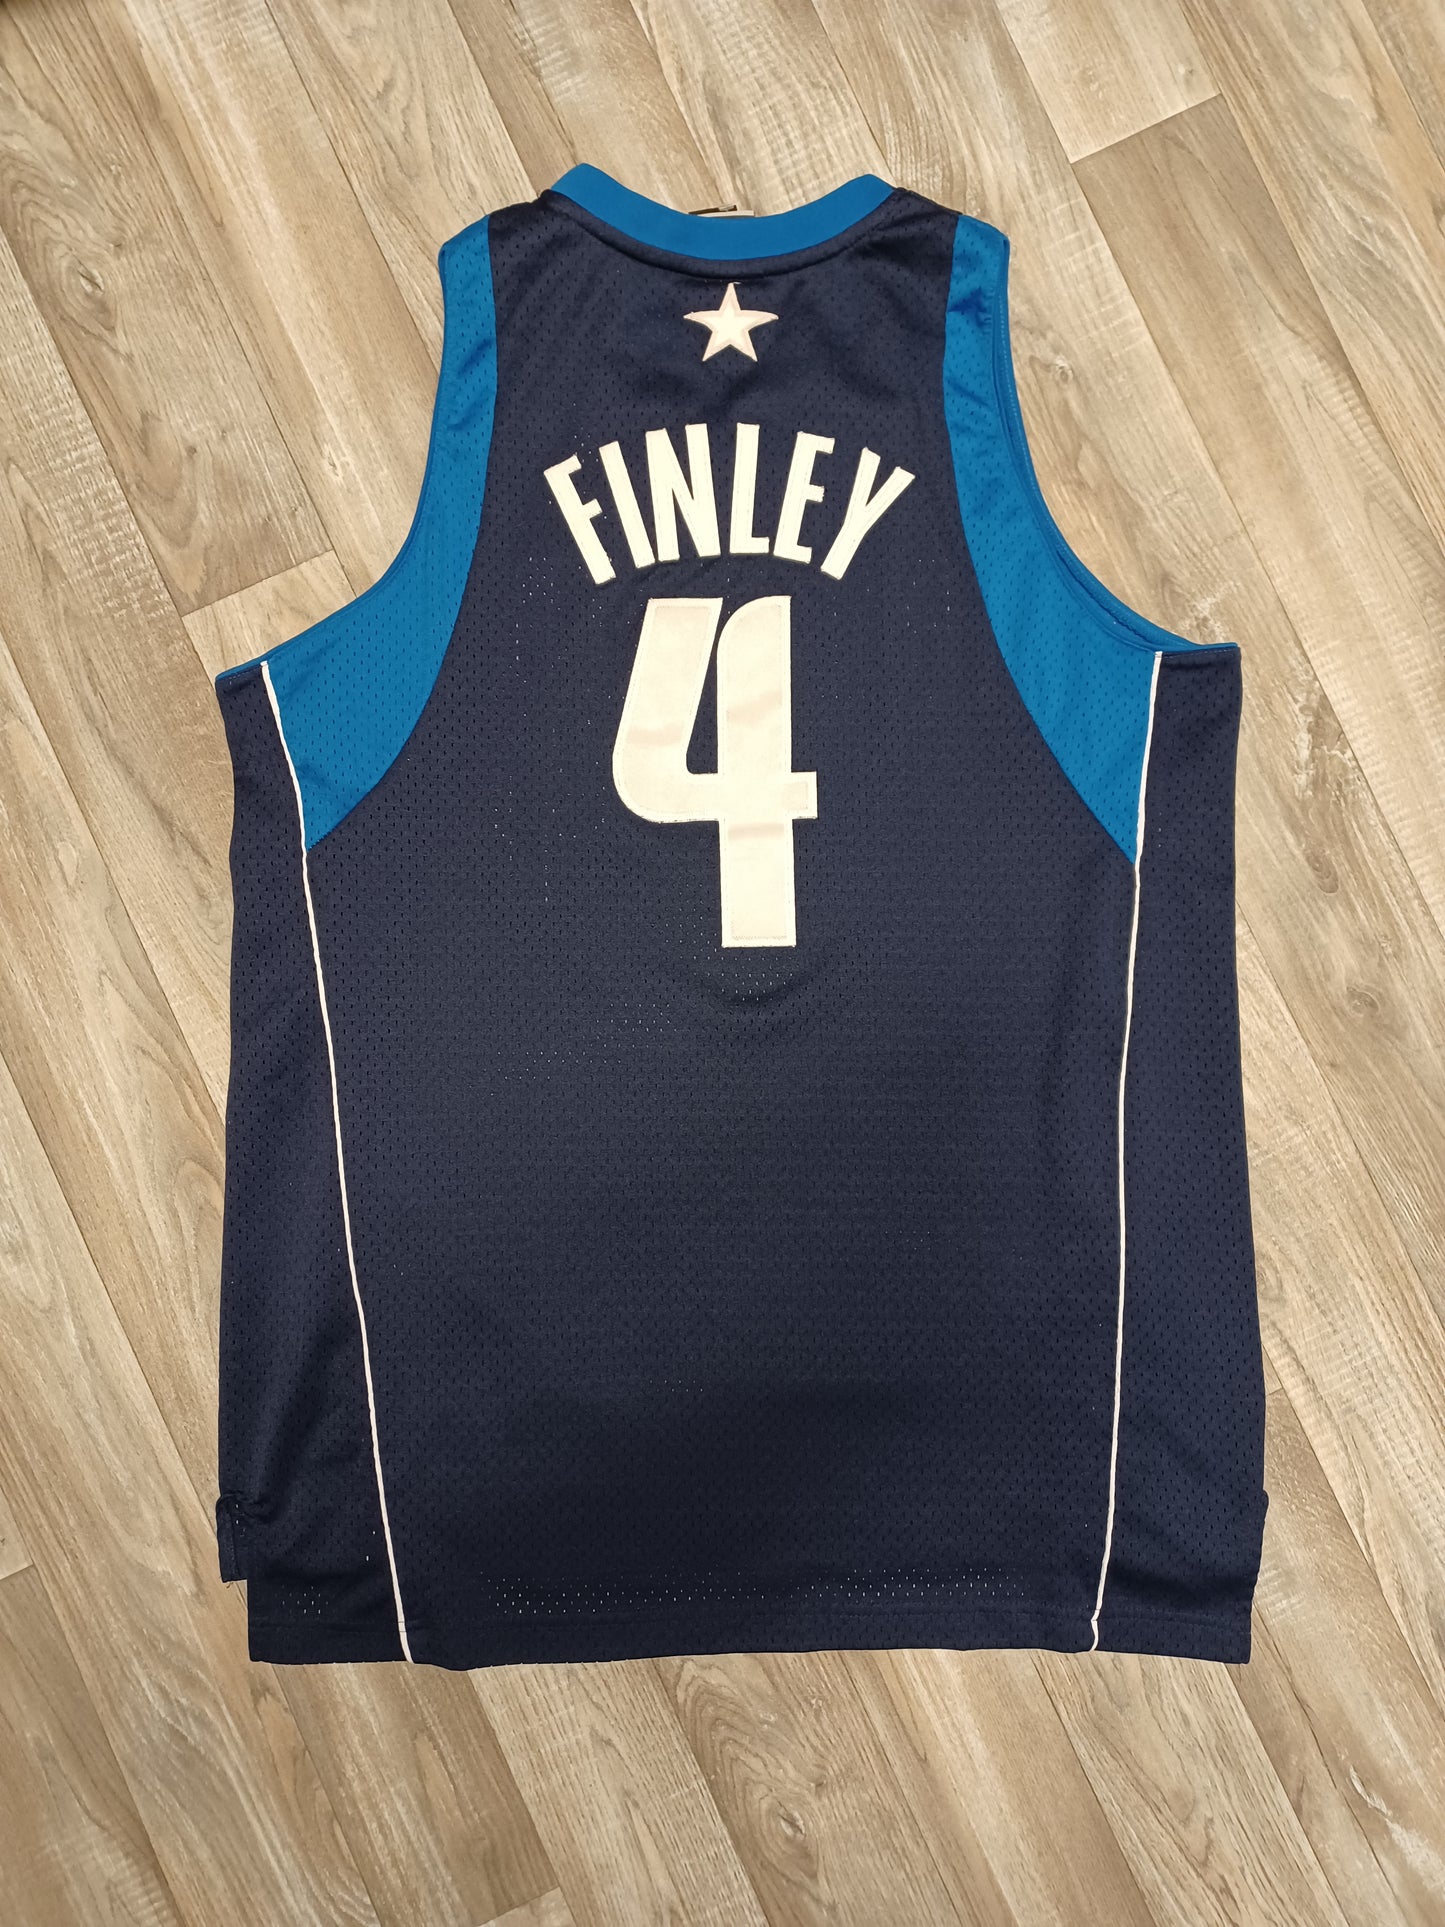 Michael Finley Dallas Mavericks Jersey Size Large